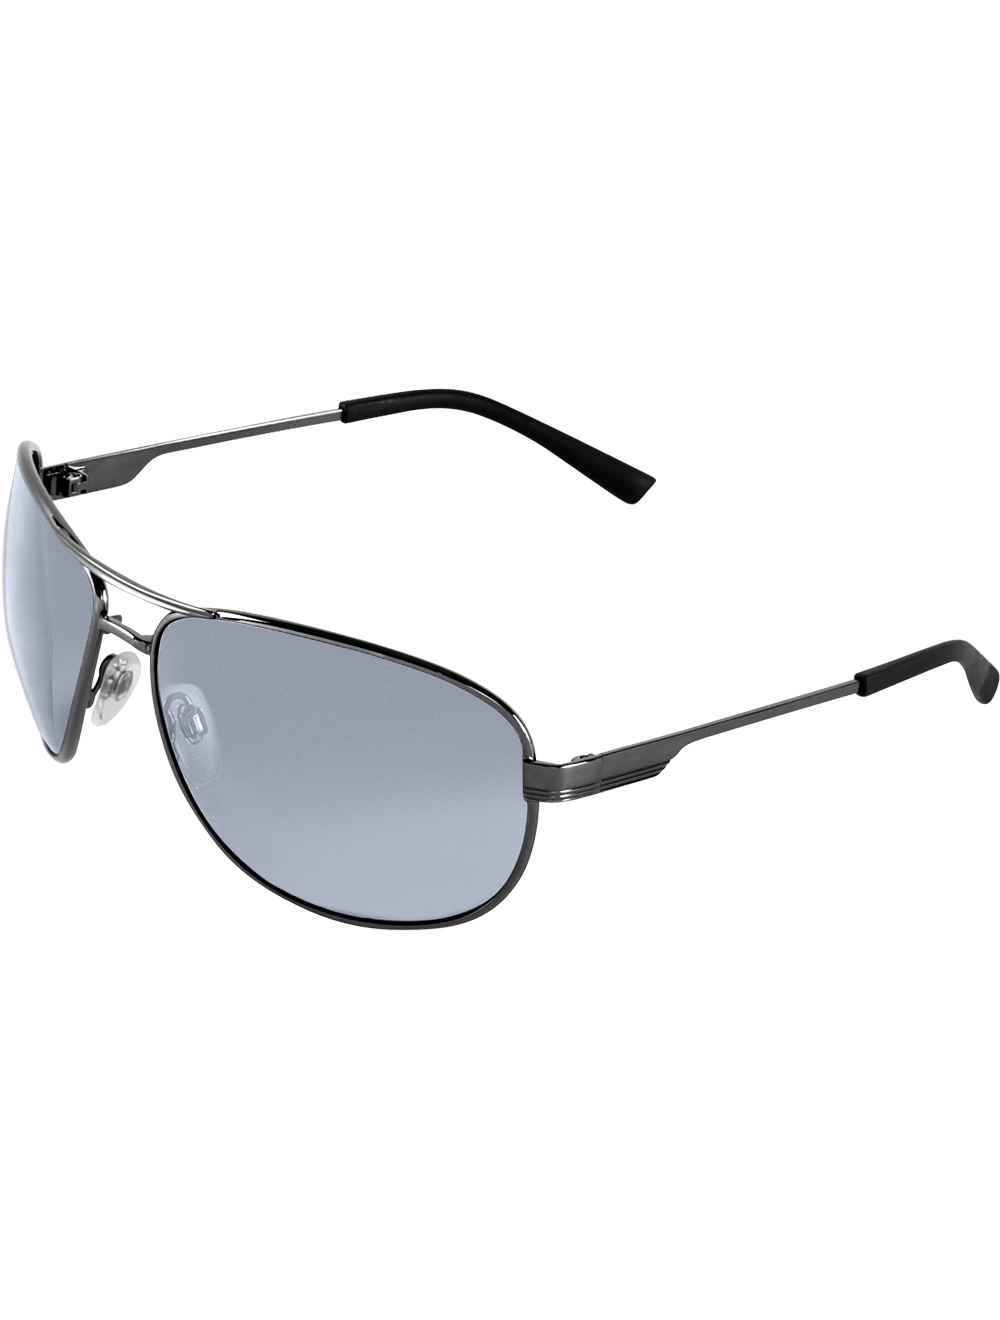 Acero® Silver Mirror Lens, Gunmetal Frame Safety Glasses - BH24217